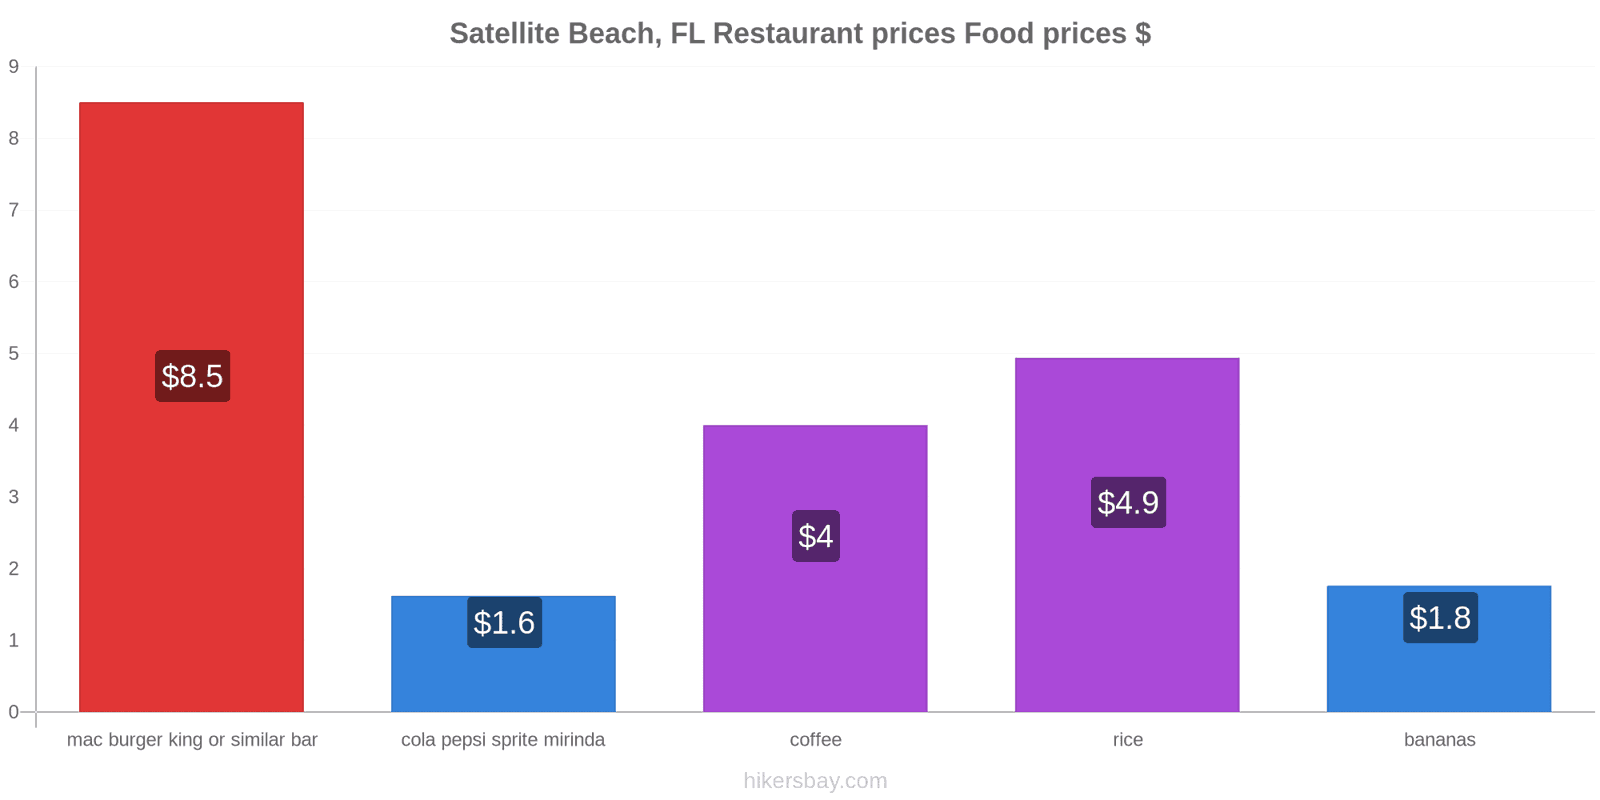 Satellite Beach, FL price changes hikersbay.com